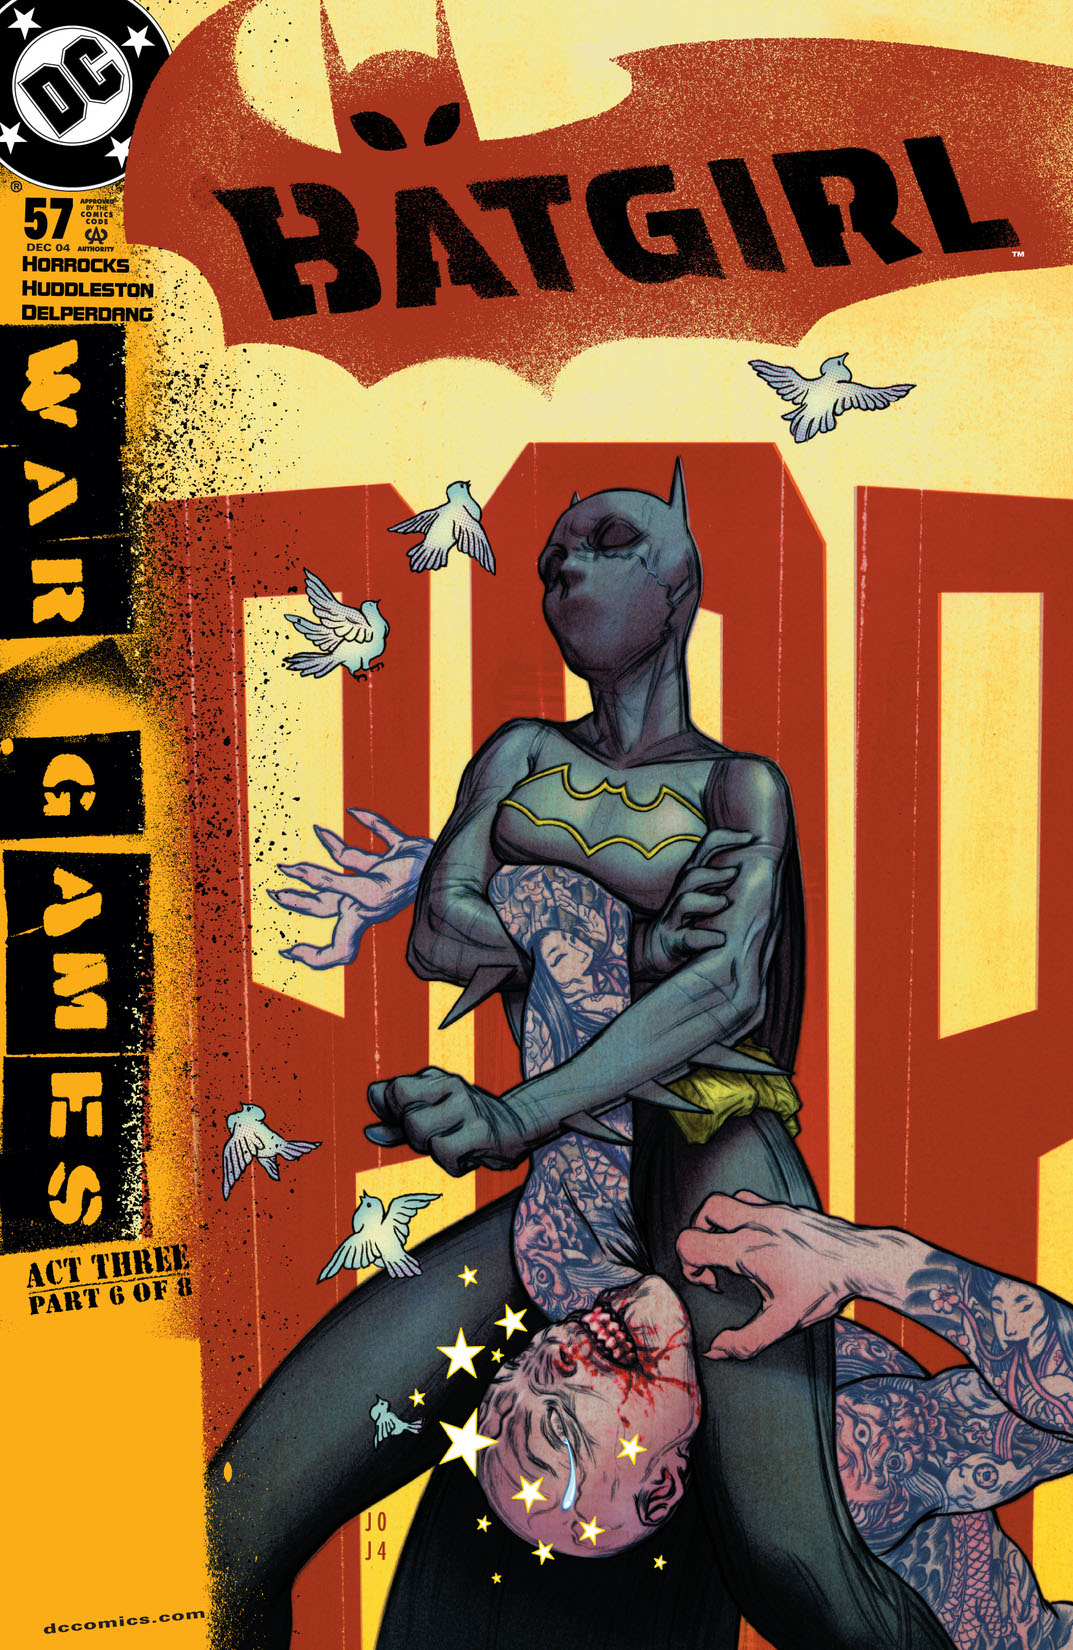 Batgirl (2000-) #57 preview images